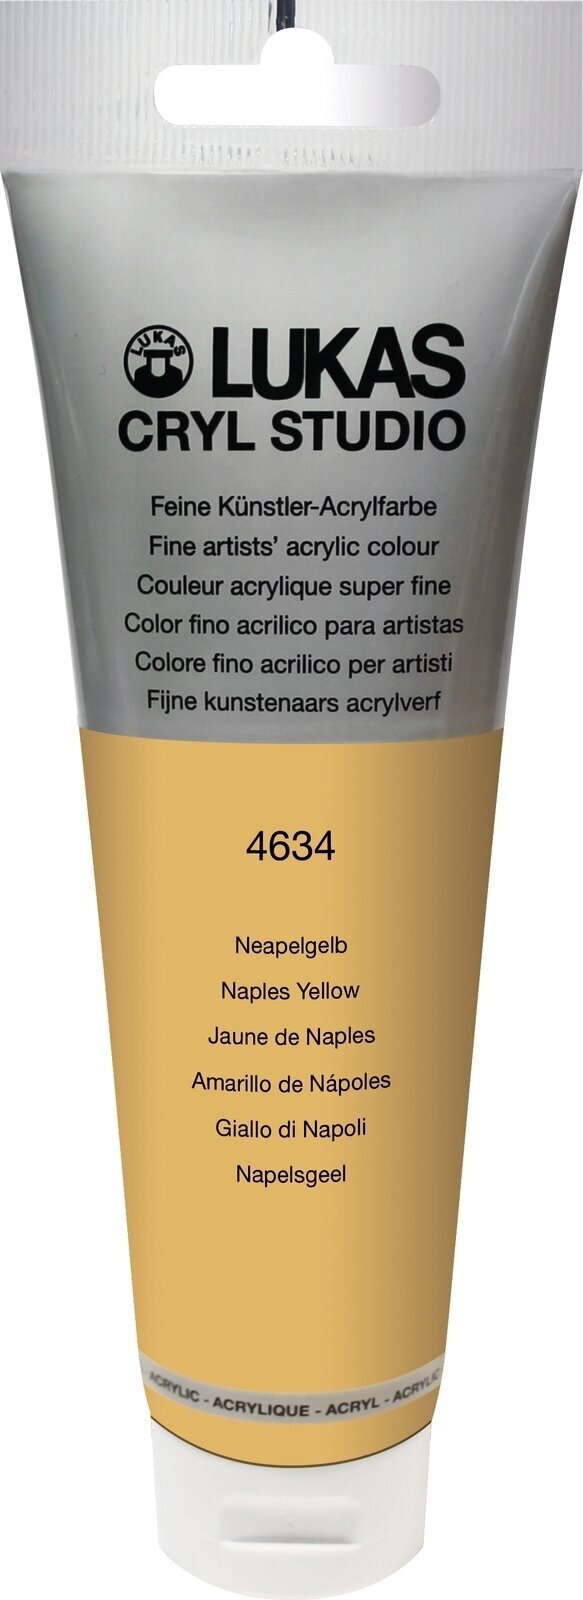 Akrylová farba Lukas Cryl Studio Acrylic Paint Plastic Tube Akrylová farba Naples Yellow 125 ml 1 ks